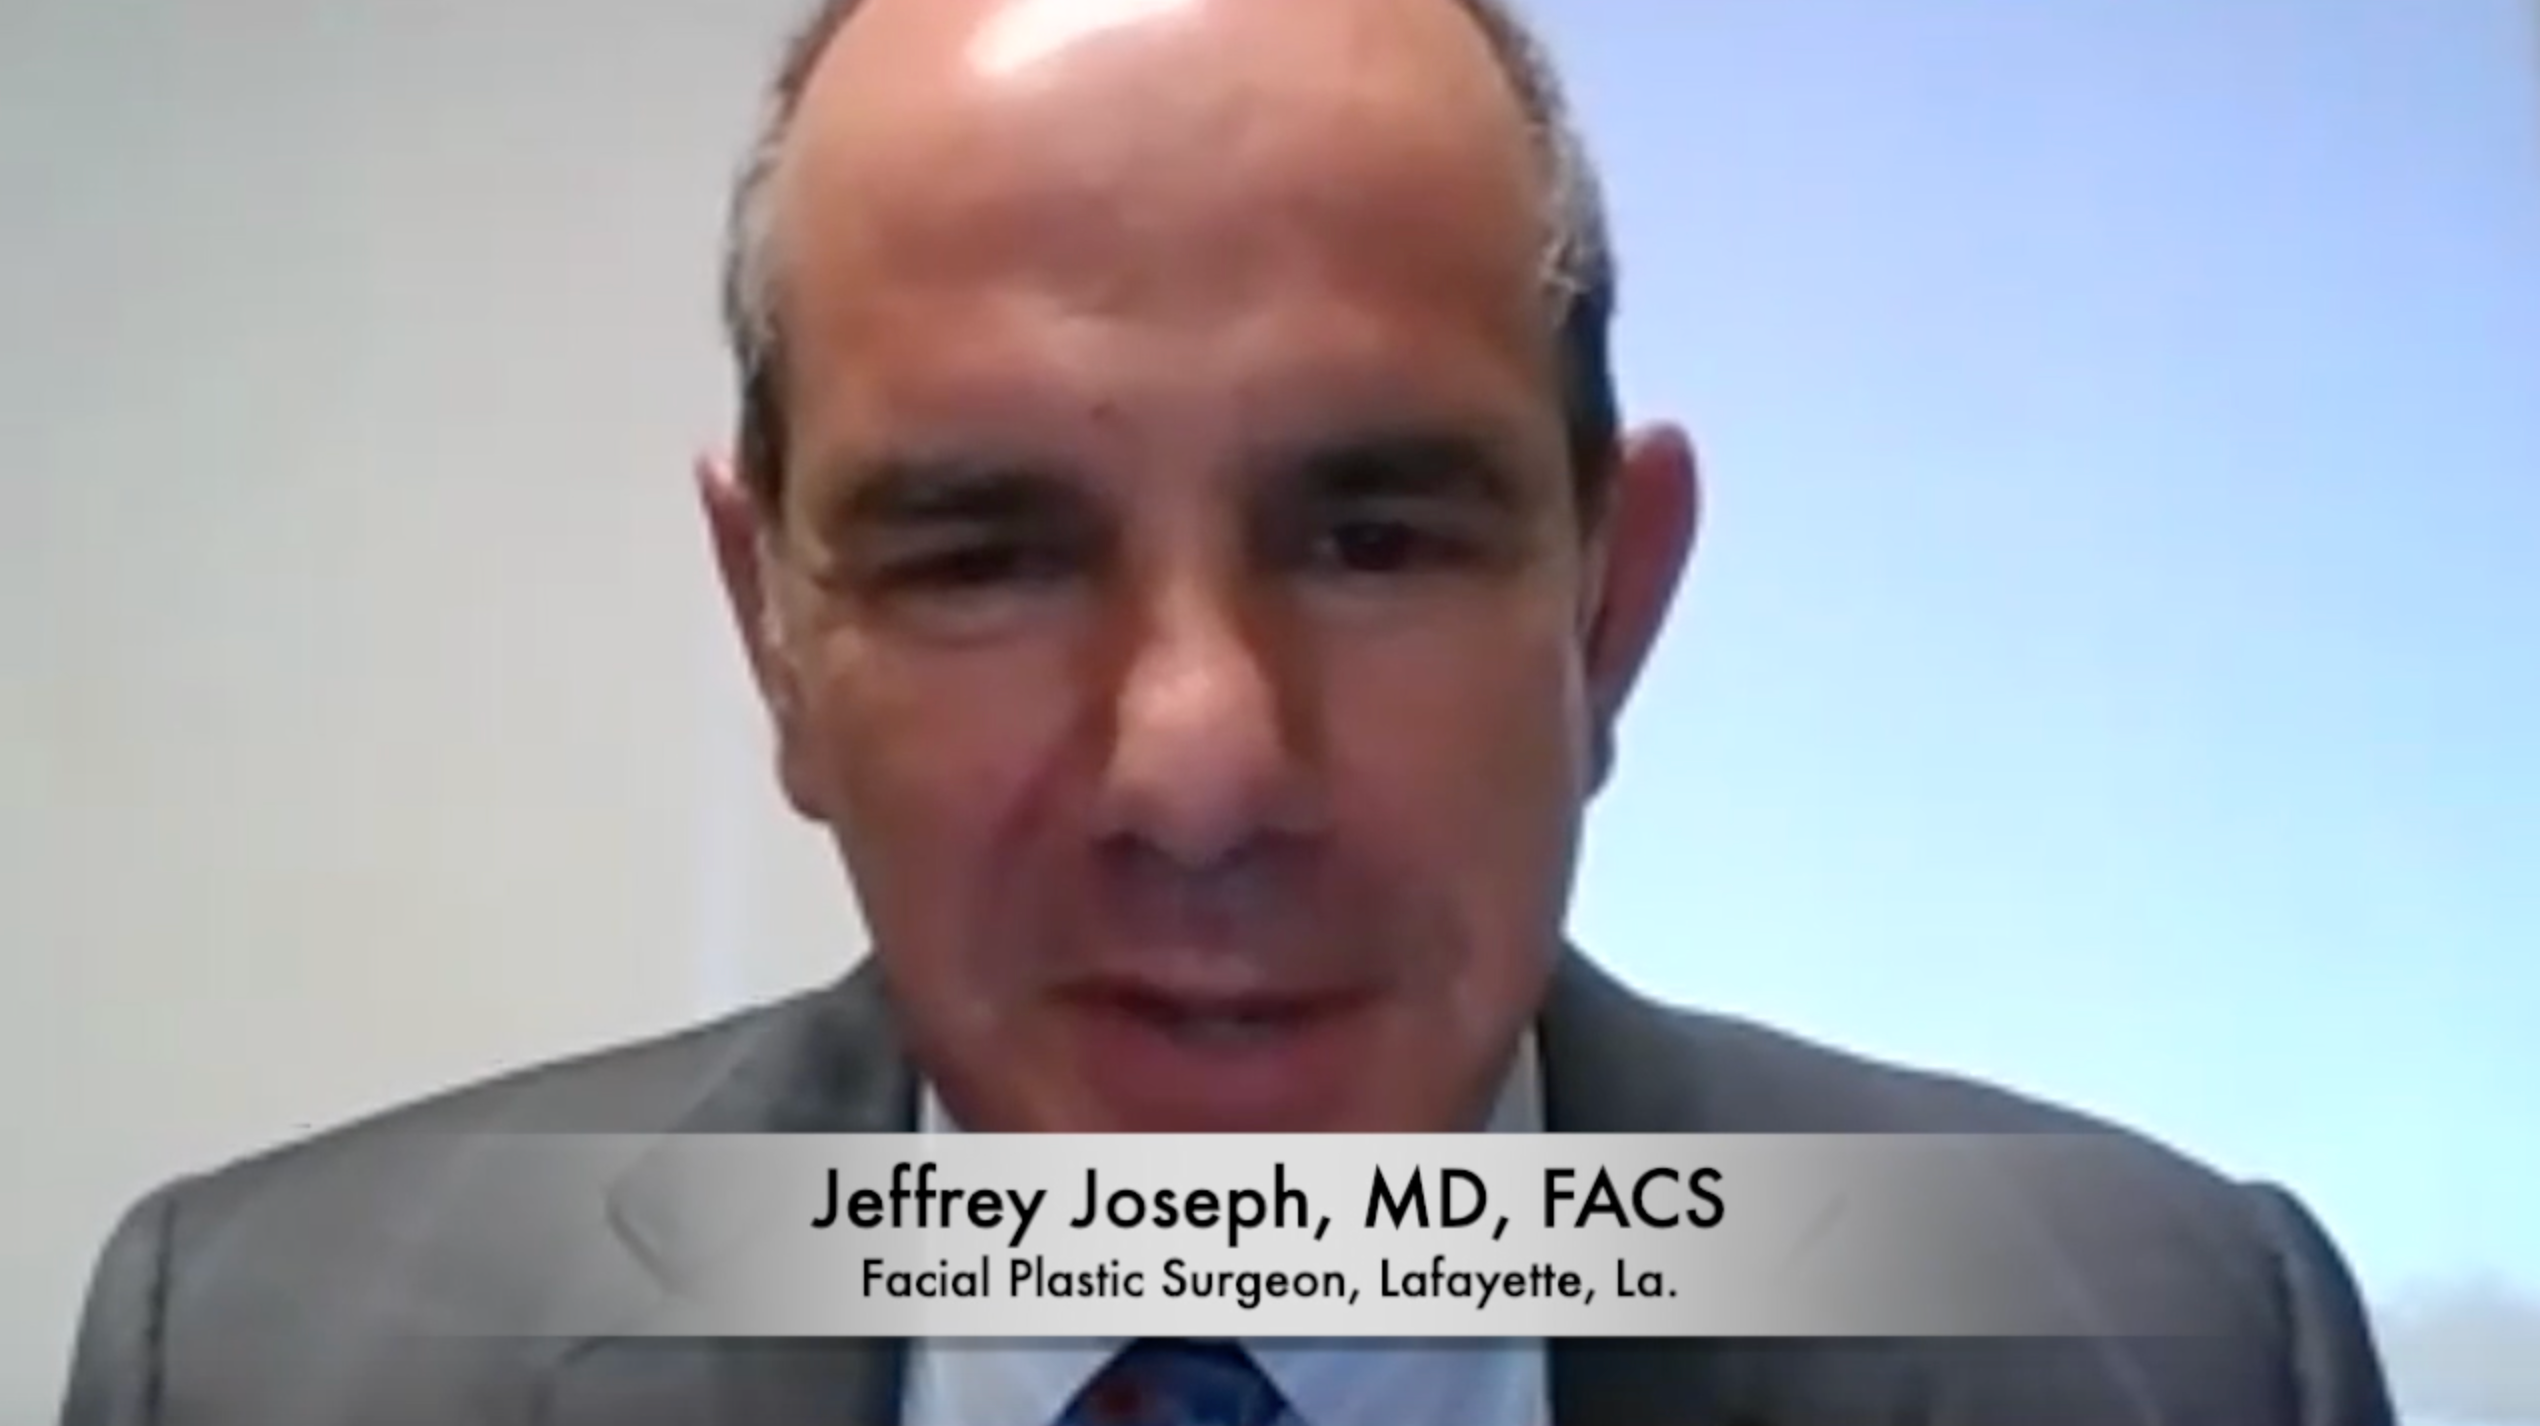 Jeffrey Joseph, MD, FACS